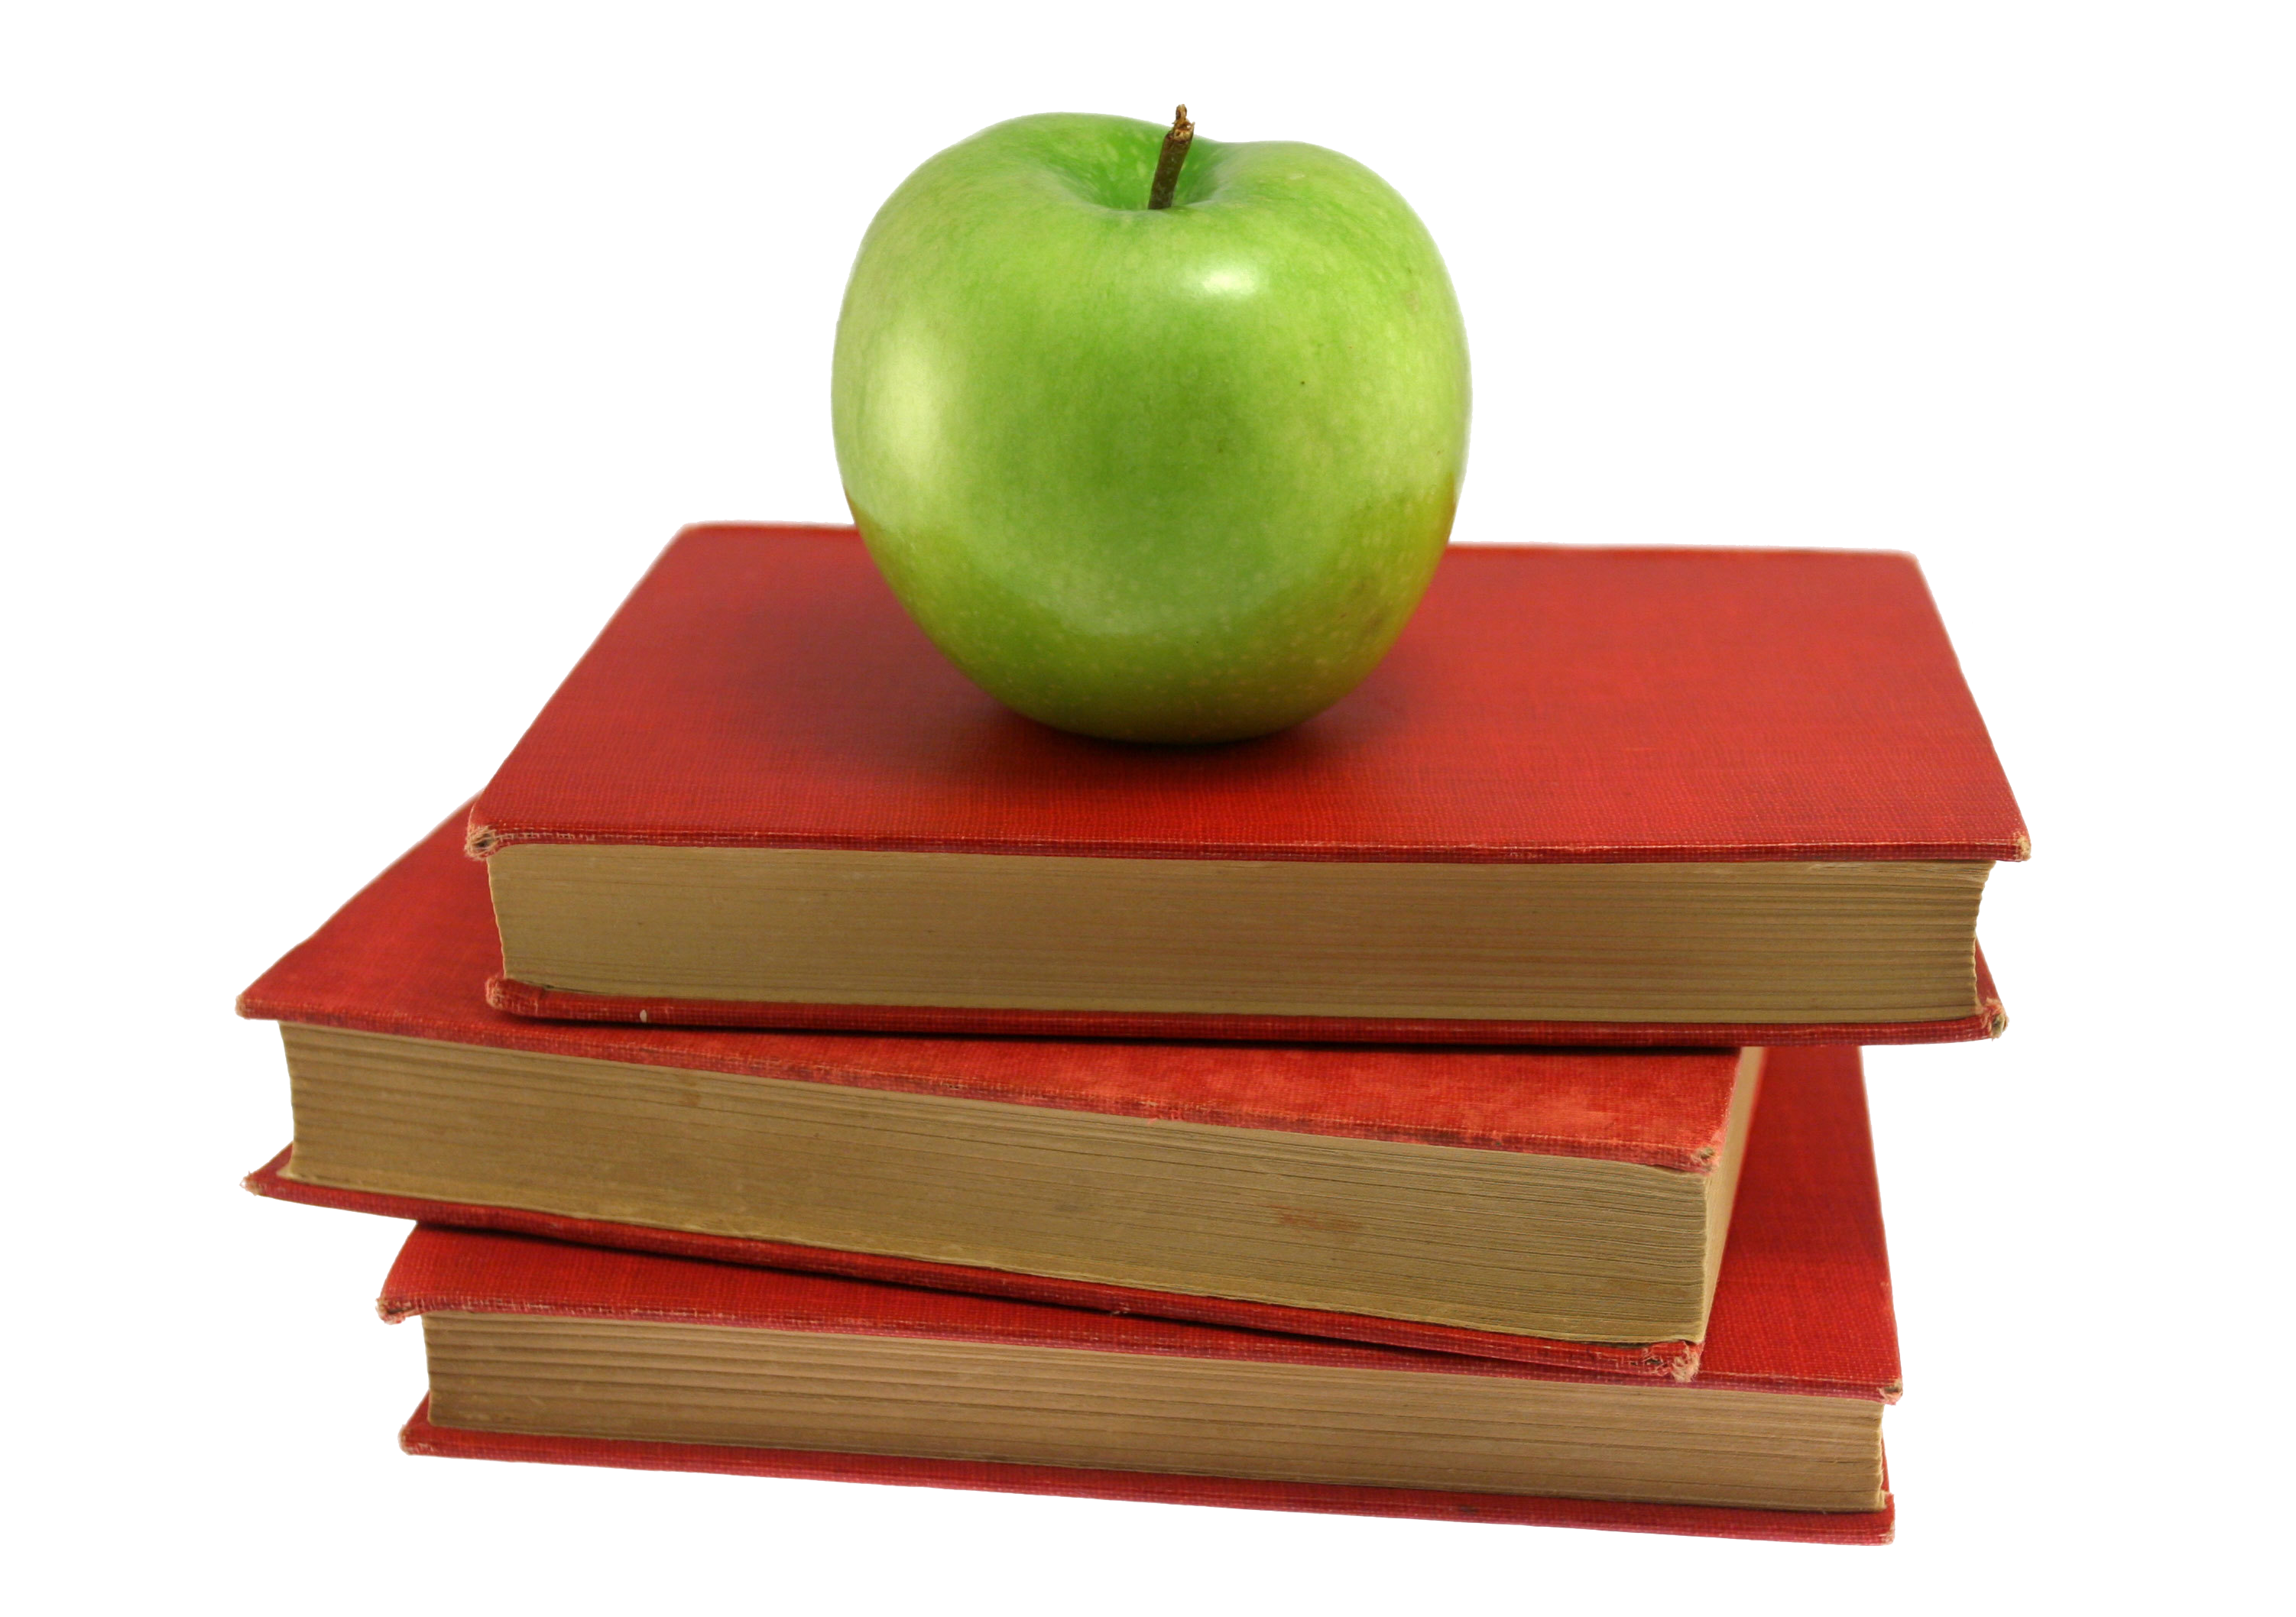 Book Apple Reading Information Blog - Apple on books 3004*2116 ...